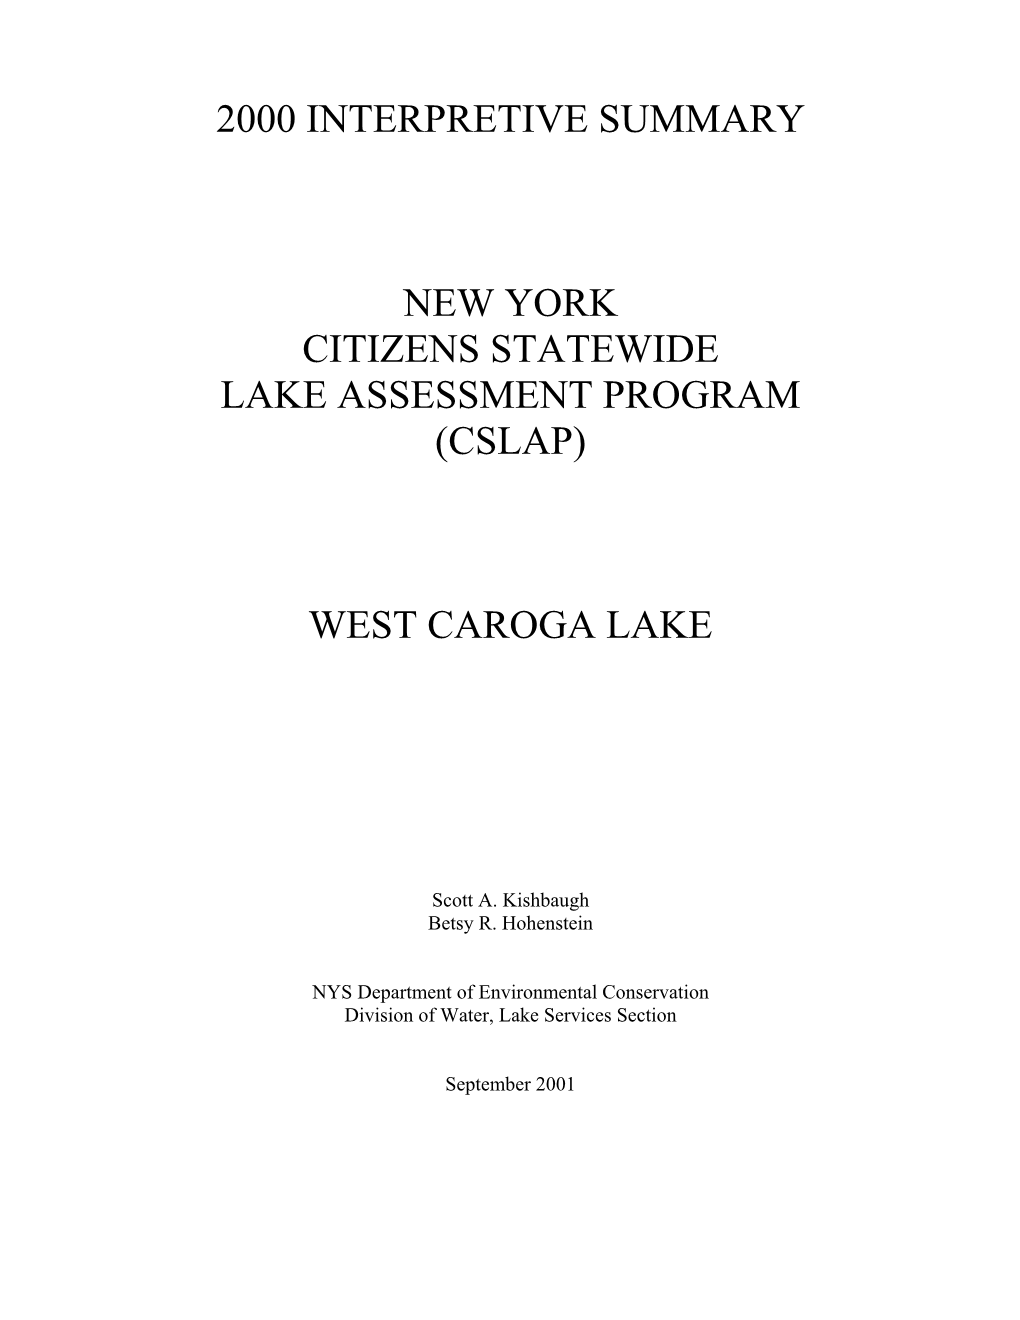 2000 Interpretive Summary New York Citizens Statewide Lake Assessment Program (Cslap) West Caroga Lake